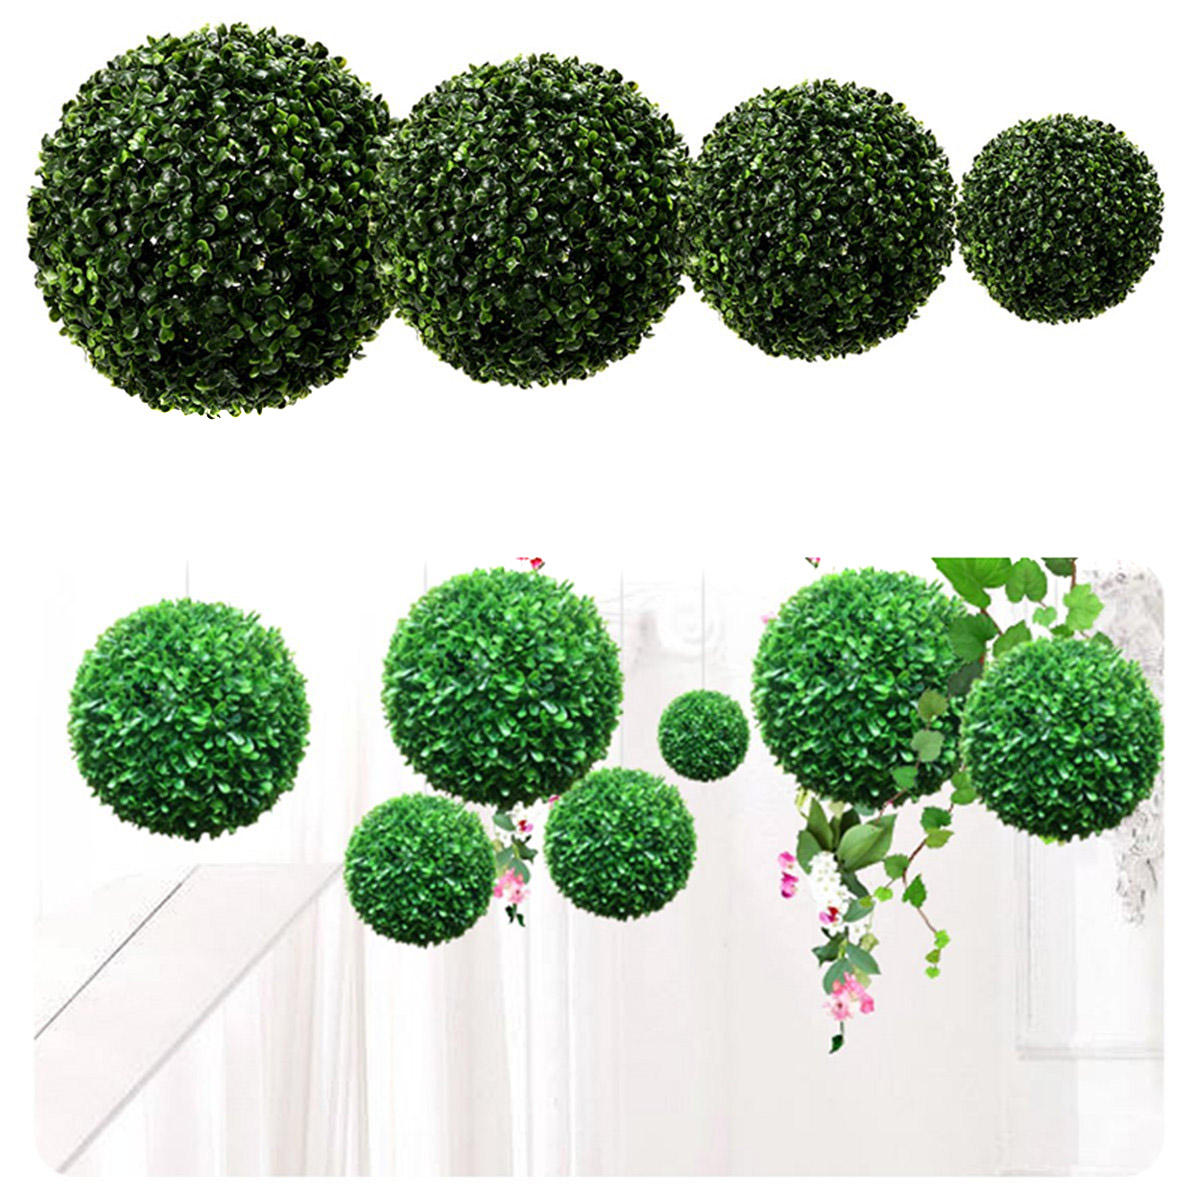 10-30 cm Kunstmatige groene topiary gras hangende balplant Home Yard Decorations